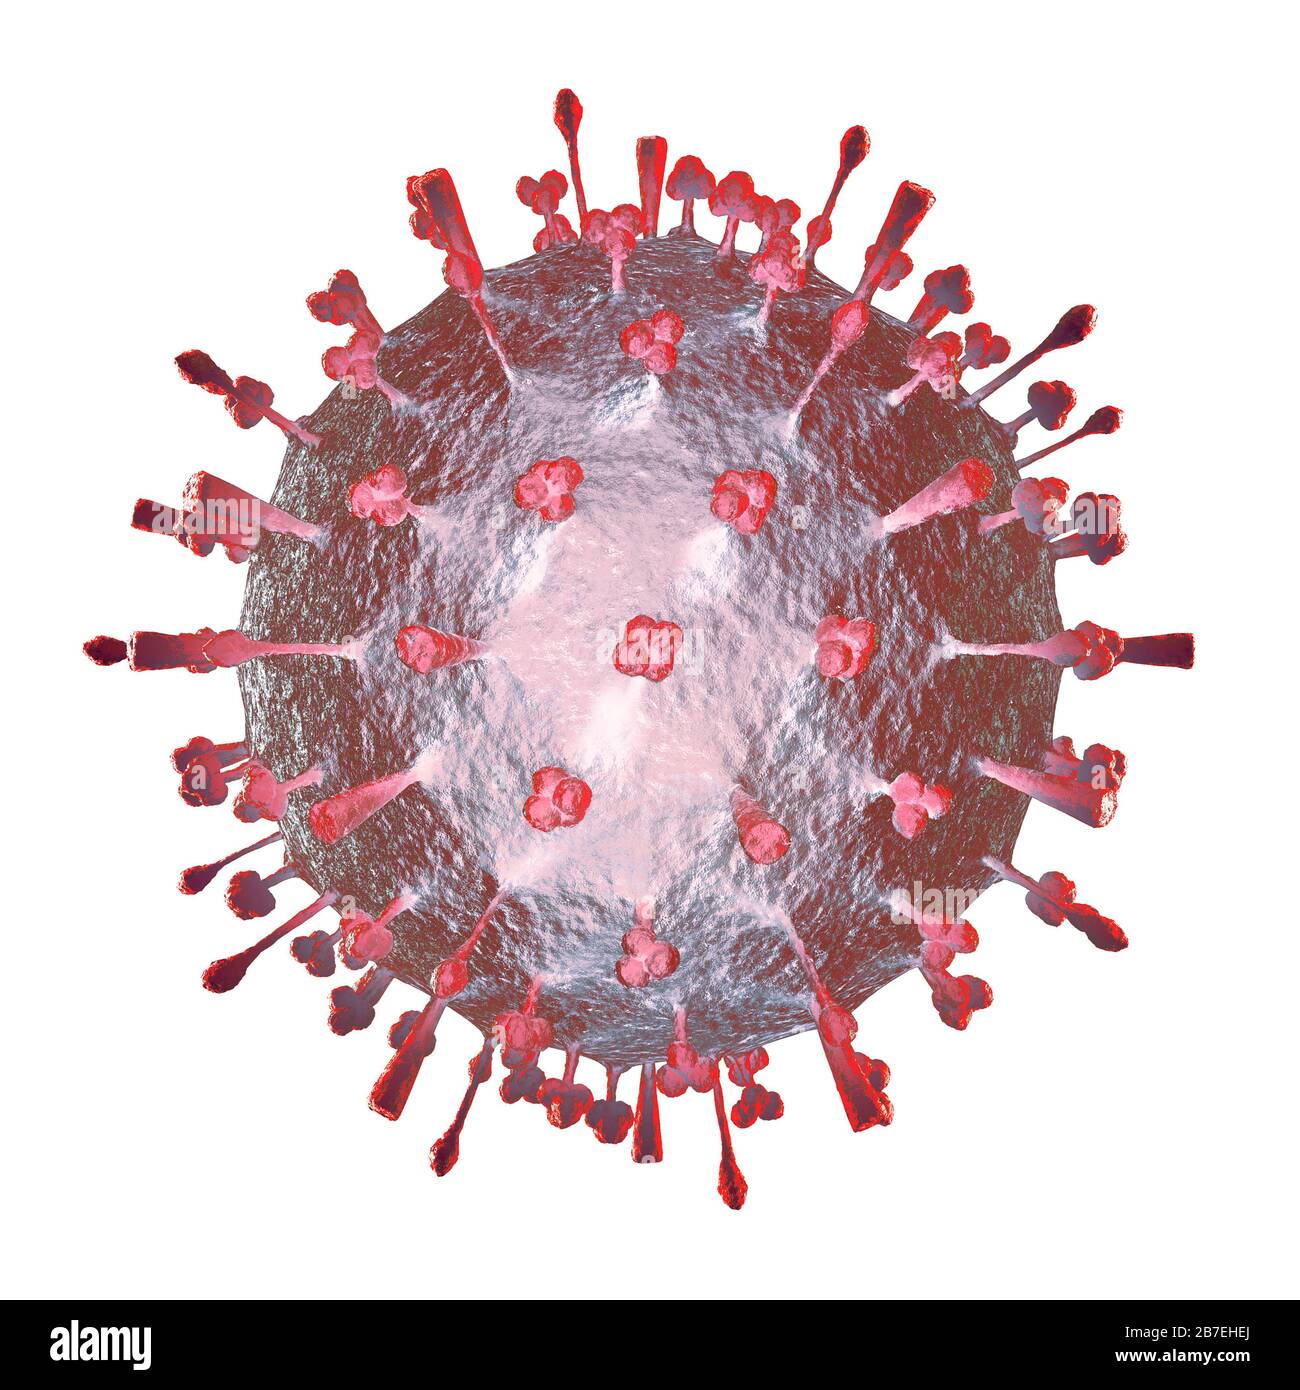 Coronavirus, COVID-19, artistic rendering. Corona virus particle 3D illustration isolated on white background. Stock Photo